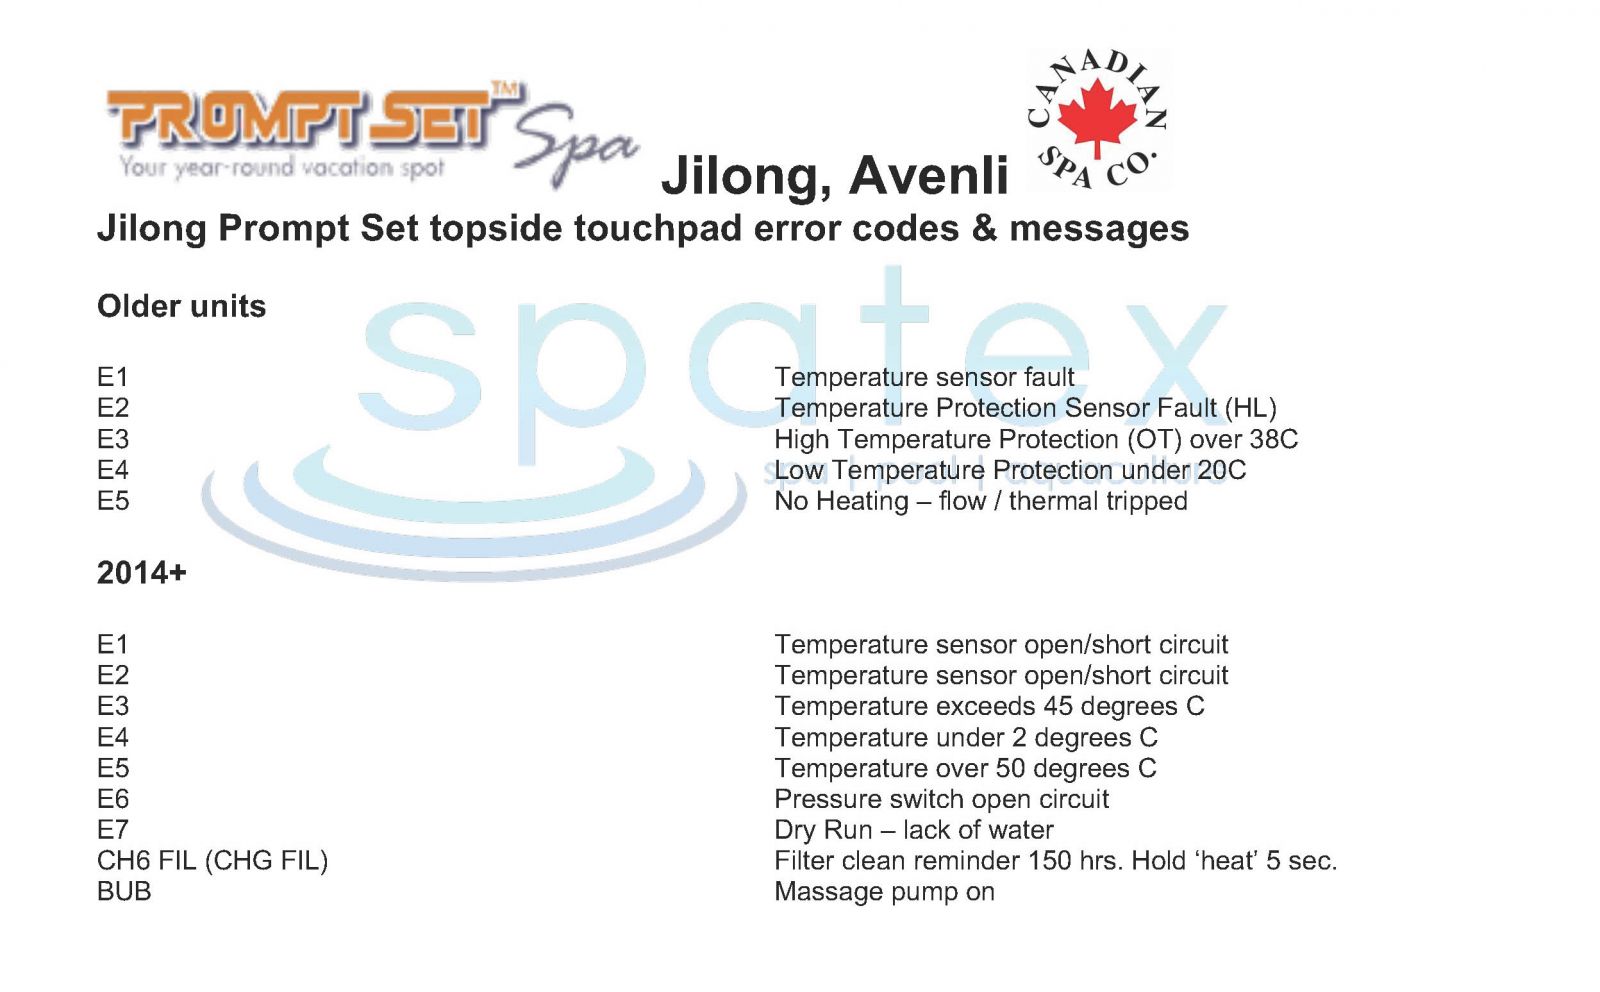 Prompt Set, Jilong, Canadian Spa Co topside fault code